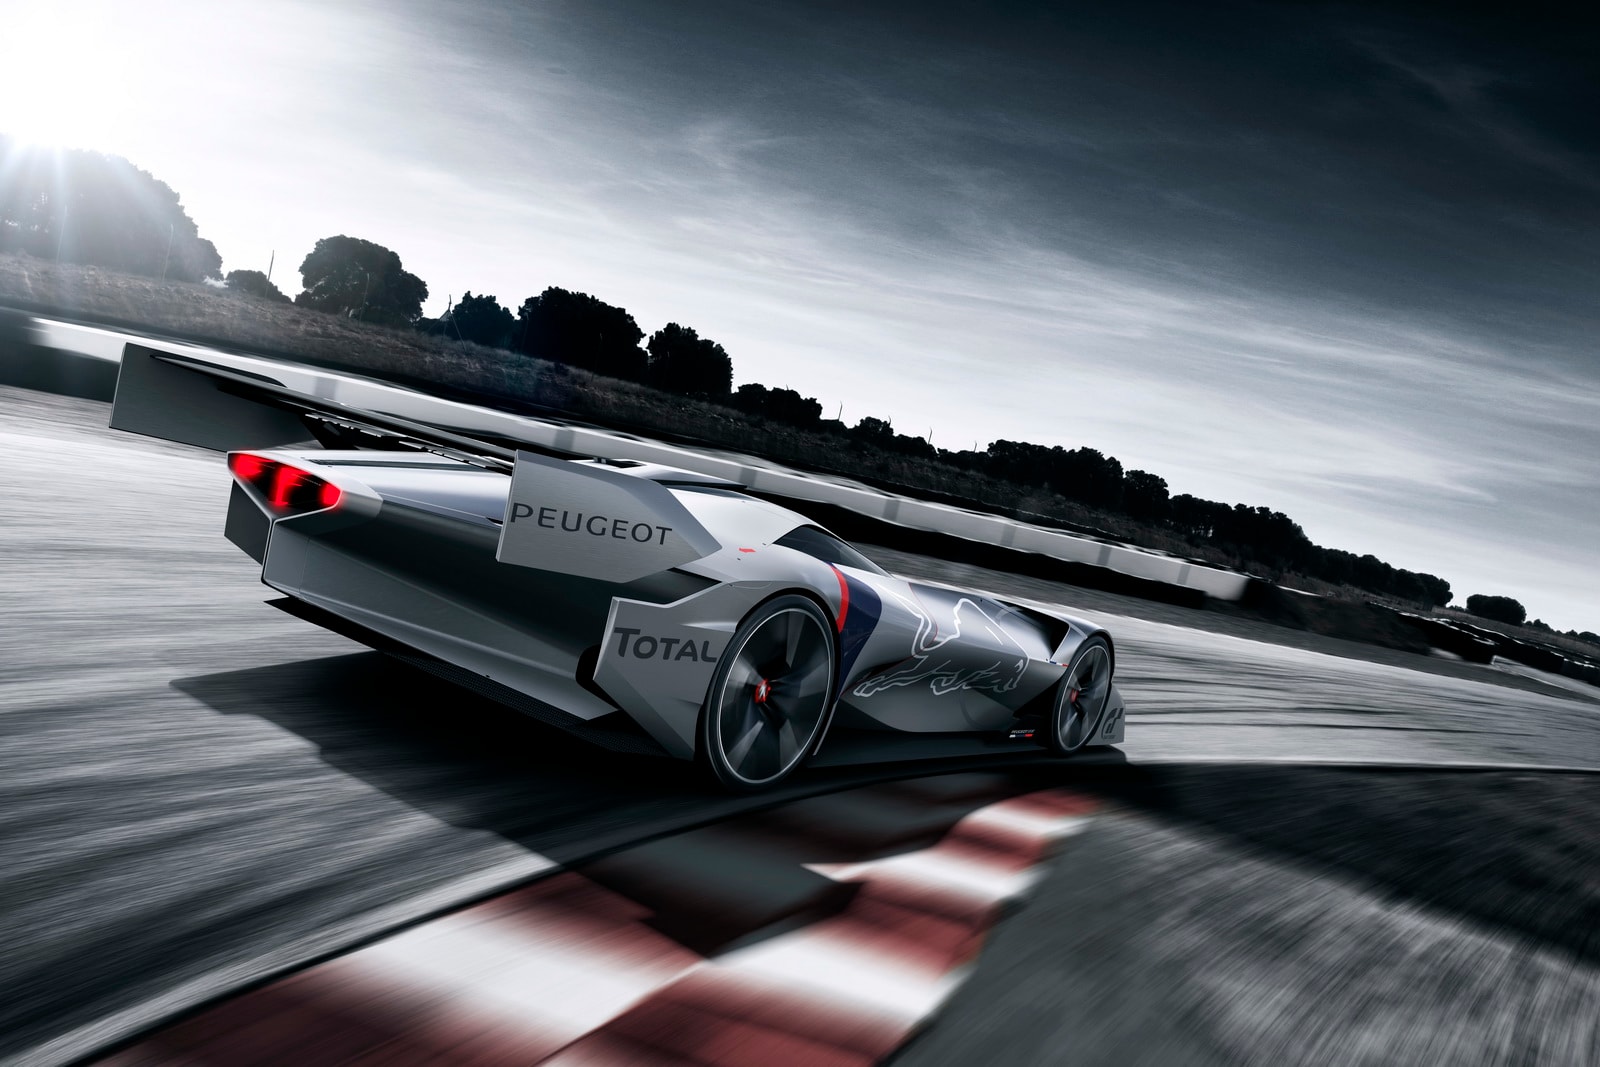 Peugeot L750 R Hybrid Vision Gran Turismo Video Game Car Racer